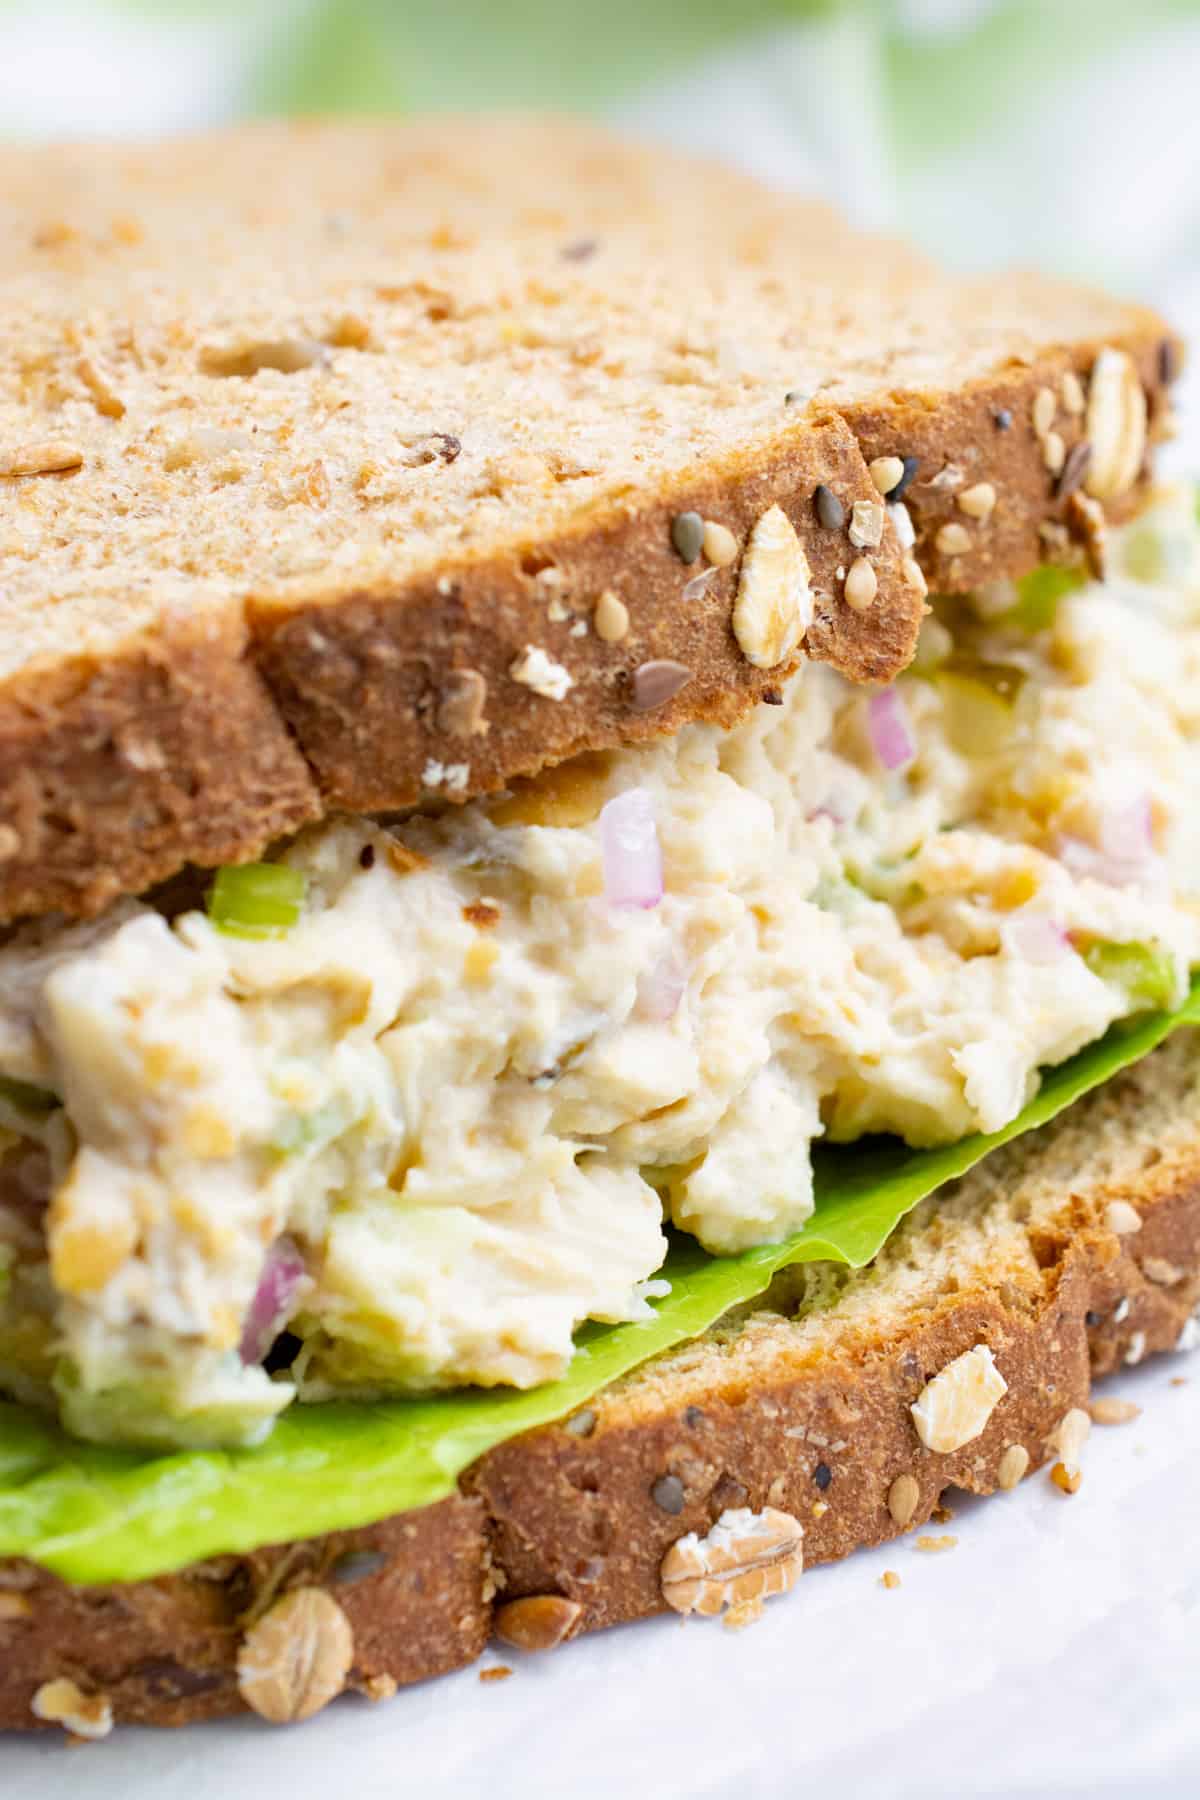 Vegan tuna salad sandwich on wheat bread.